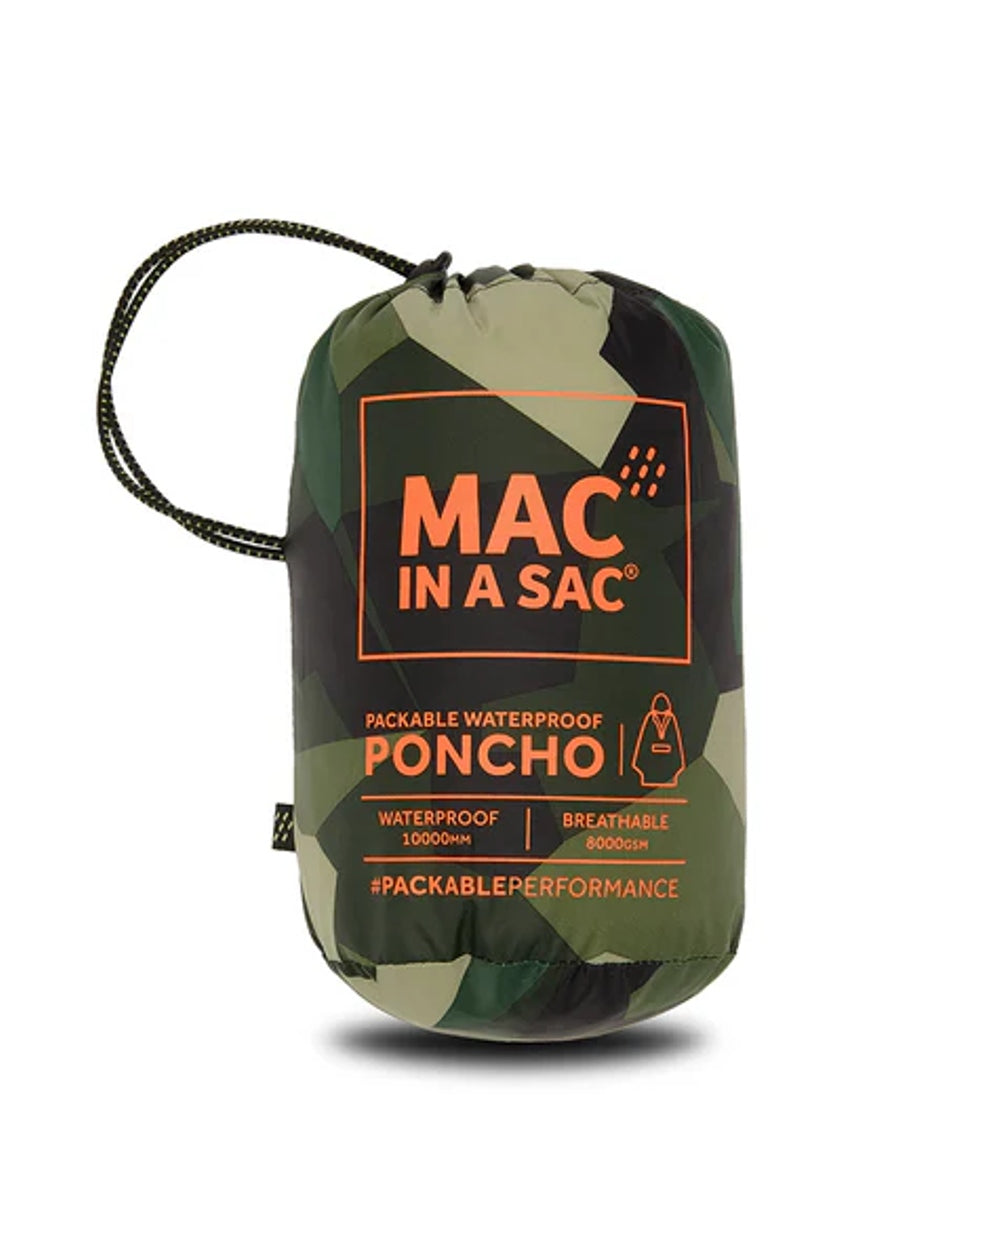 Green Camo coloured Mac In A Sac Waterproof Poncho on a white background 